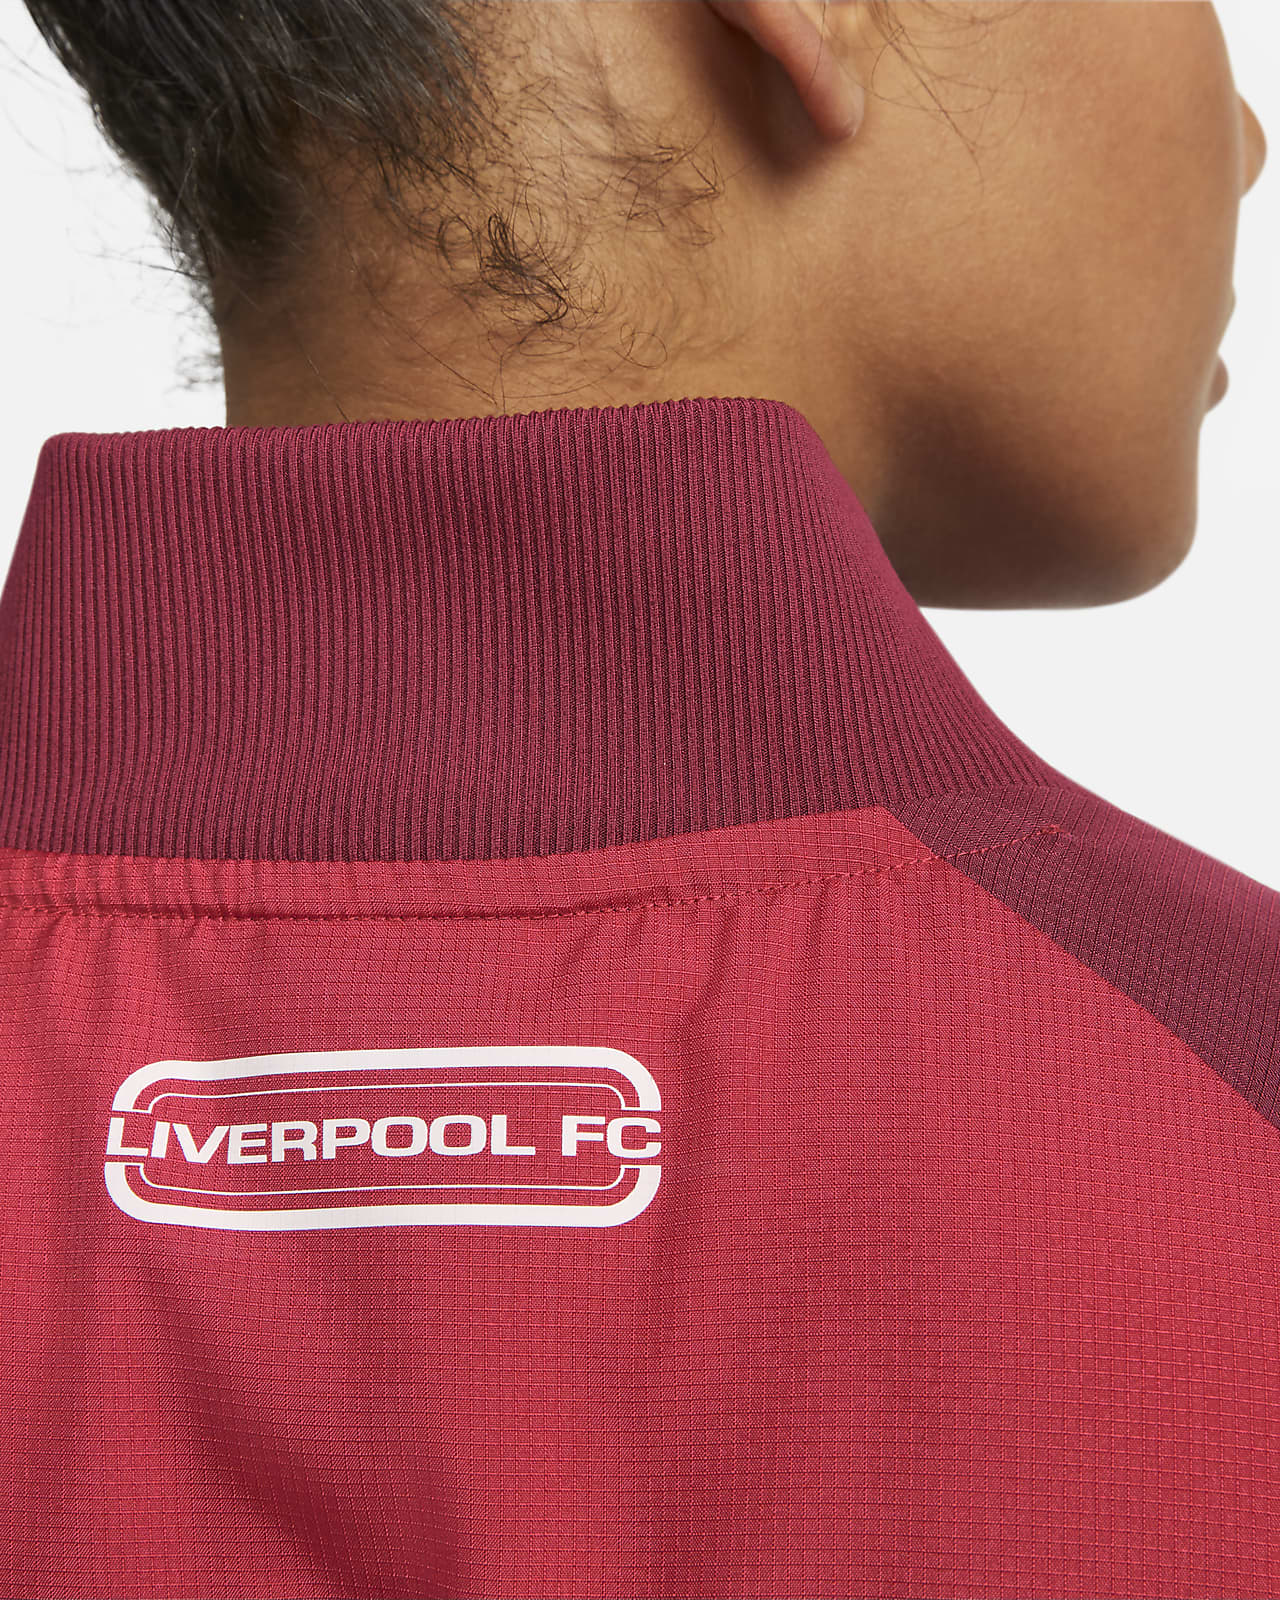 Liverpool FC Women's Nike Dri-FIT Soccer Jacket